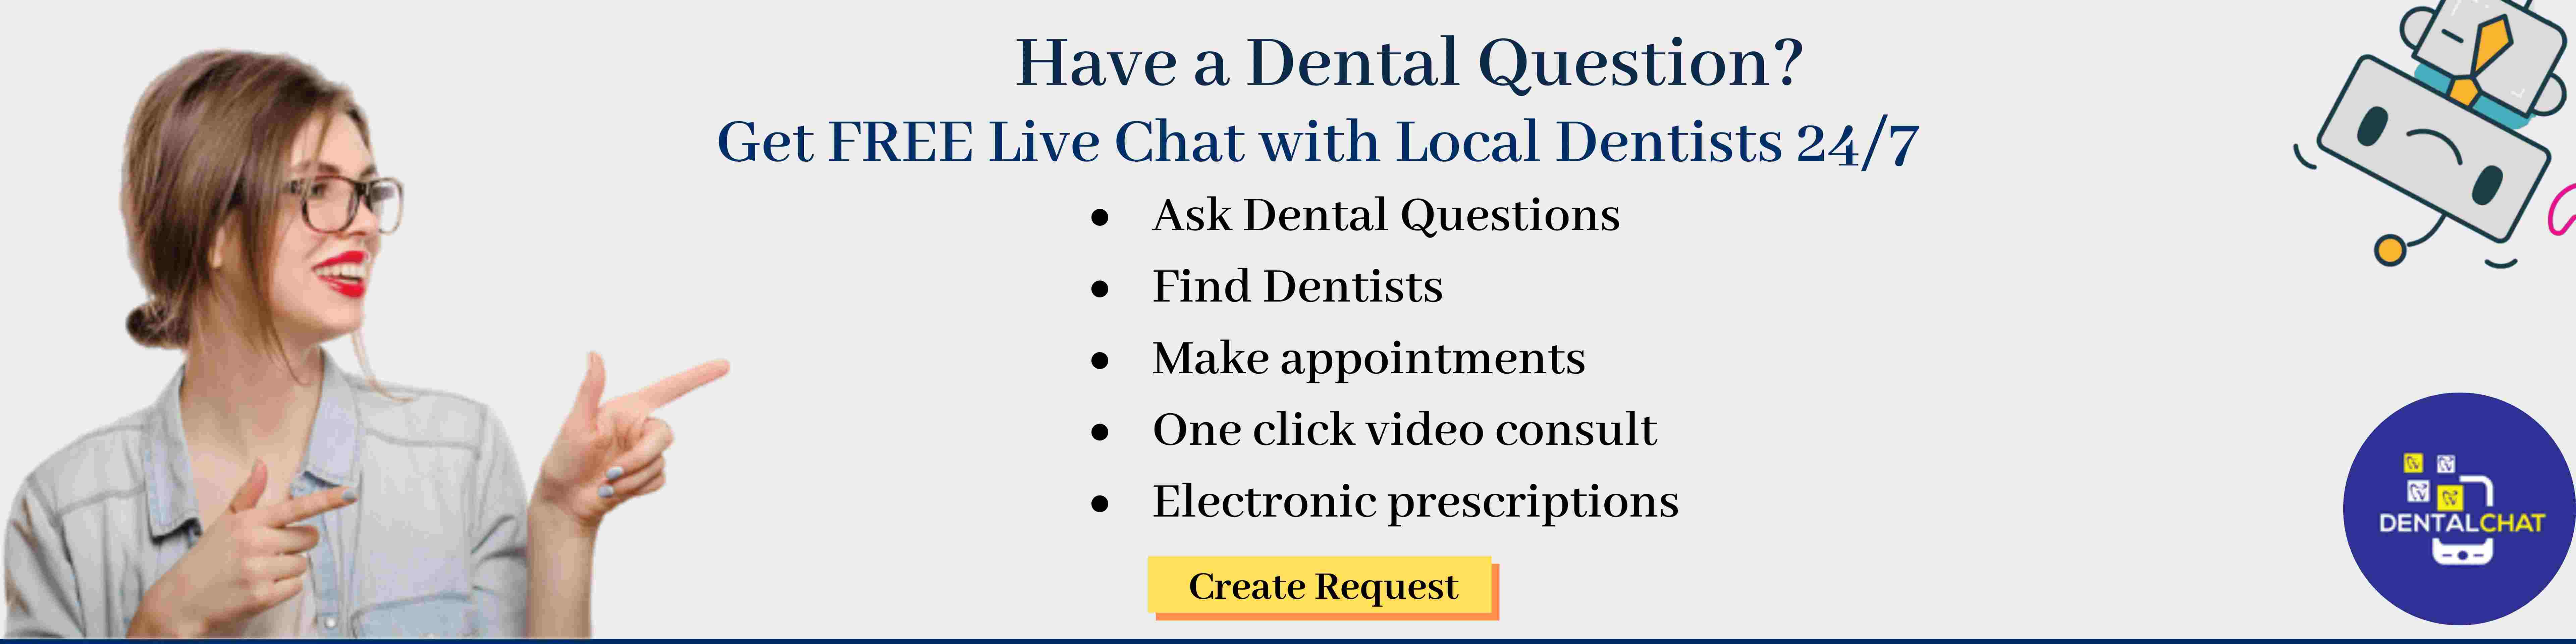 teledentist dental insurance plan information, local teledentistry dentist insurances plans